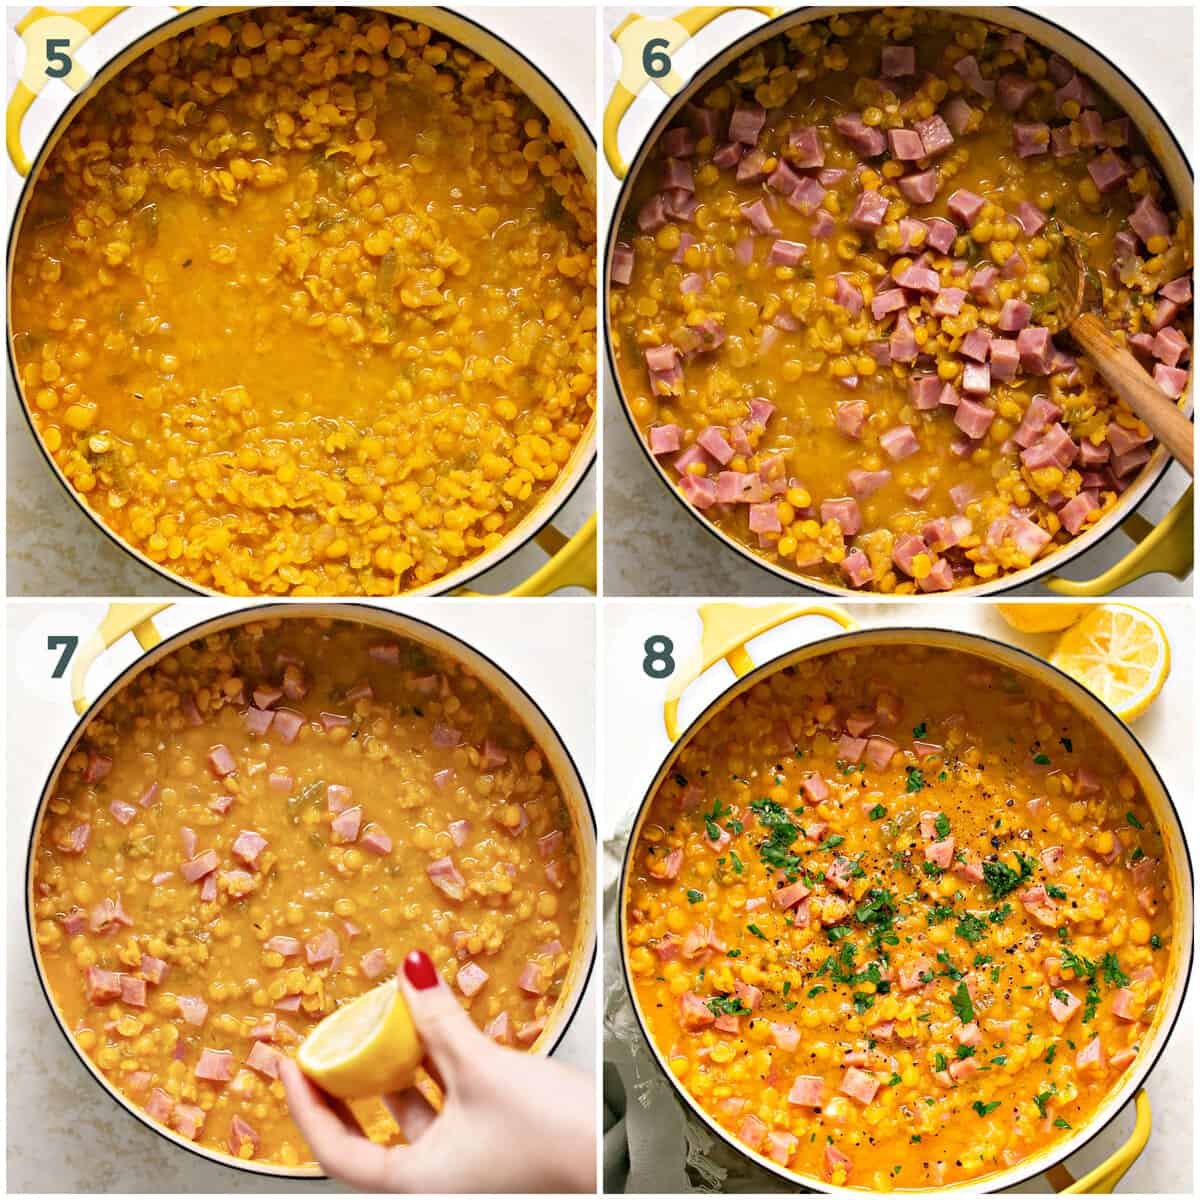 final four steps of preparing split pea soup